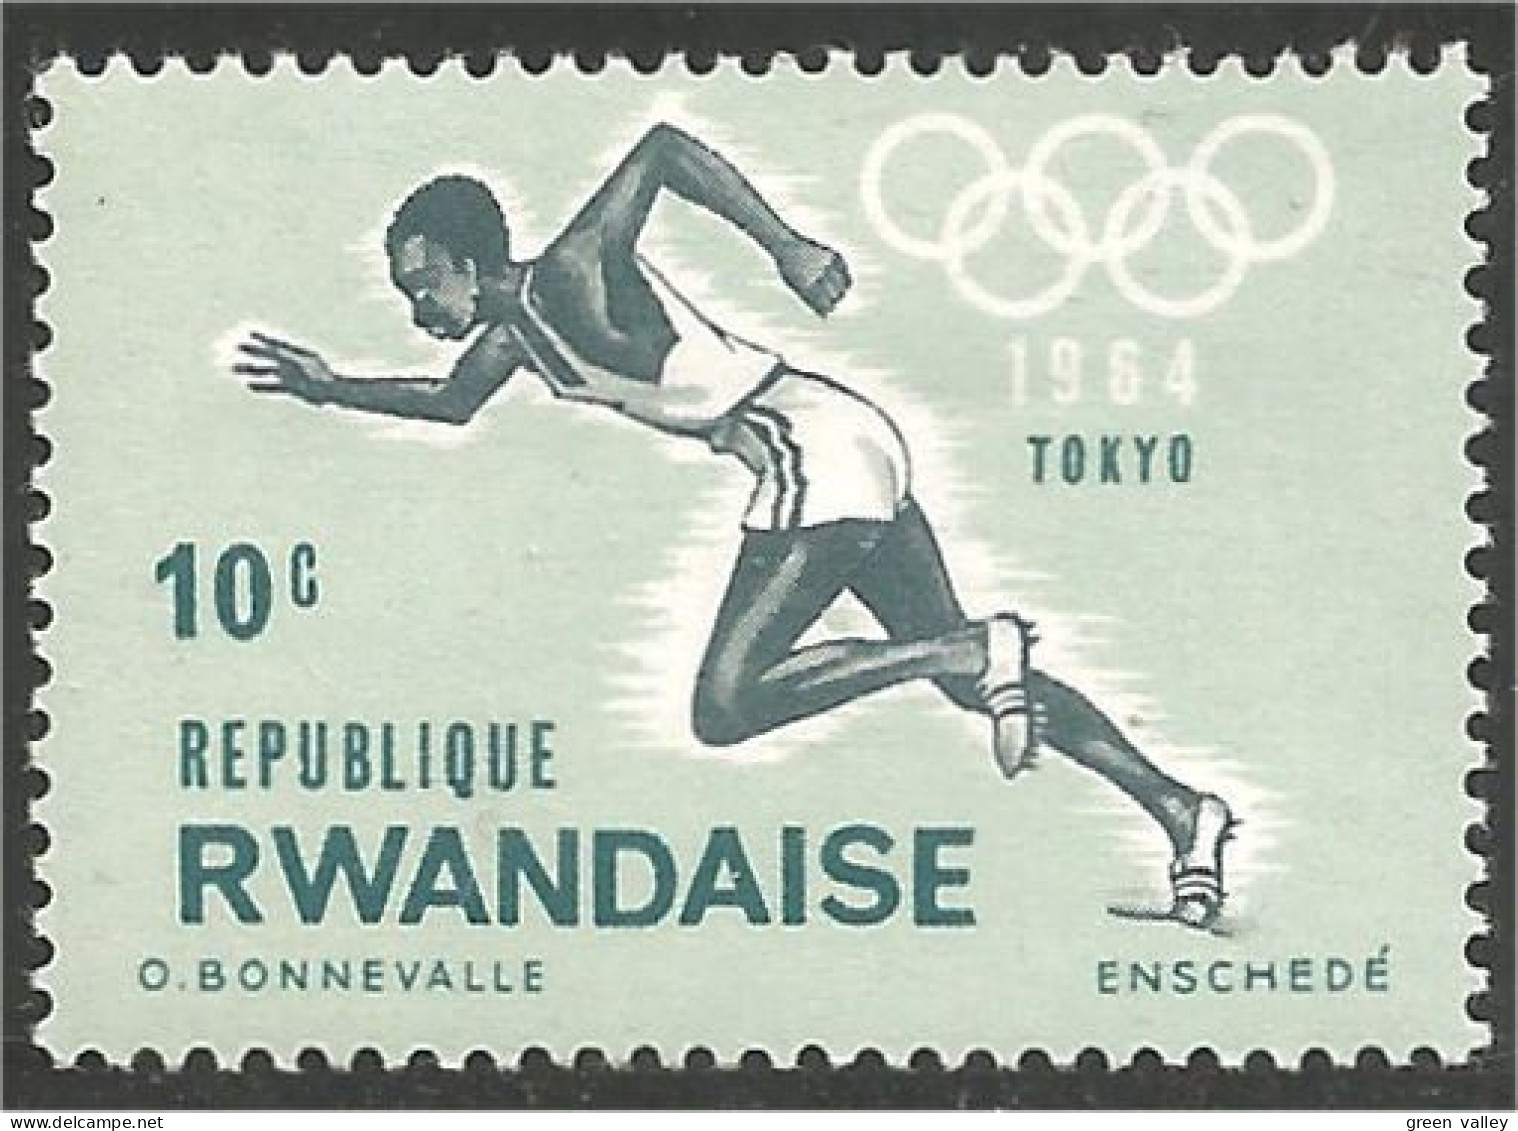 SPAT-27b Rwanda Athletisme Running Course Coureur MH * Neuf CH - Oblitérés